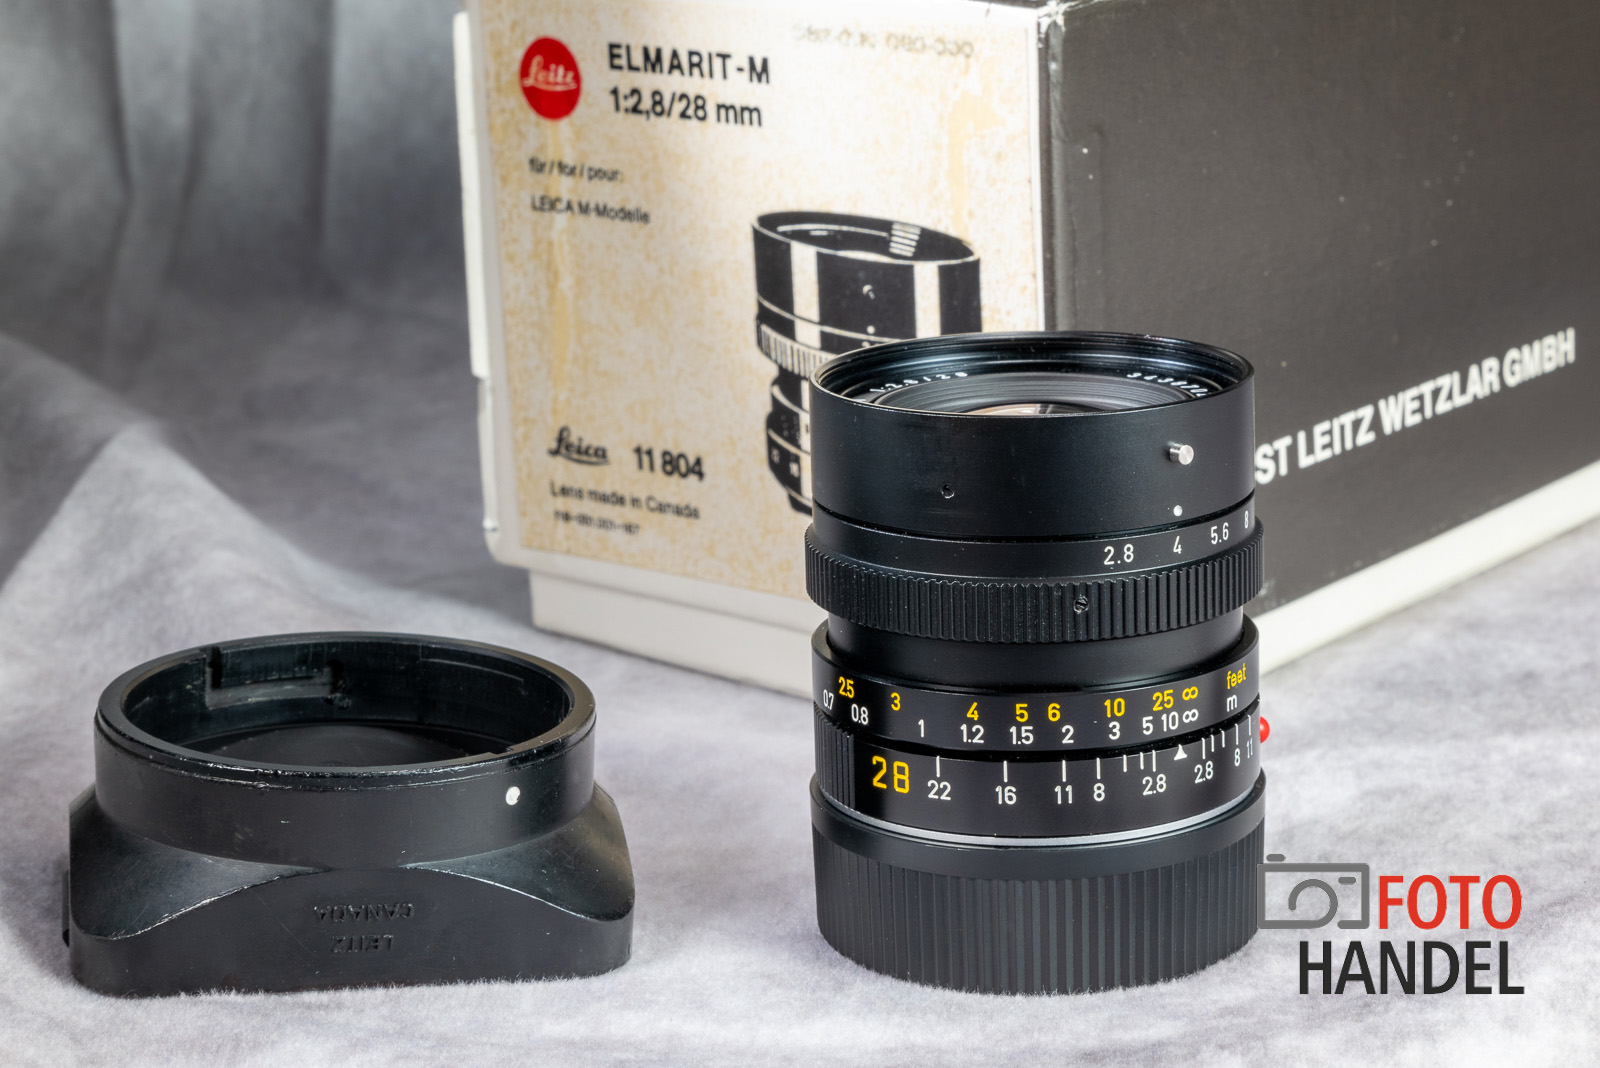 Leica Elmarit-M 28mm 2.8 - 11804